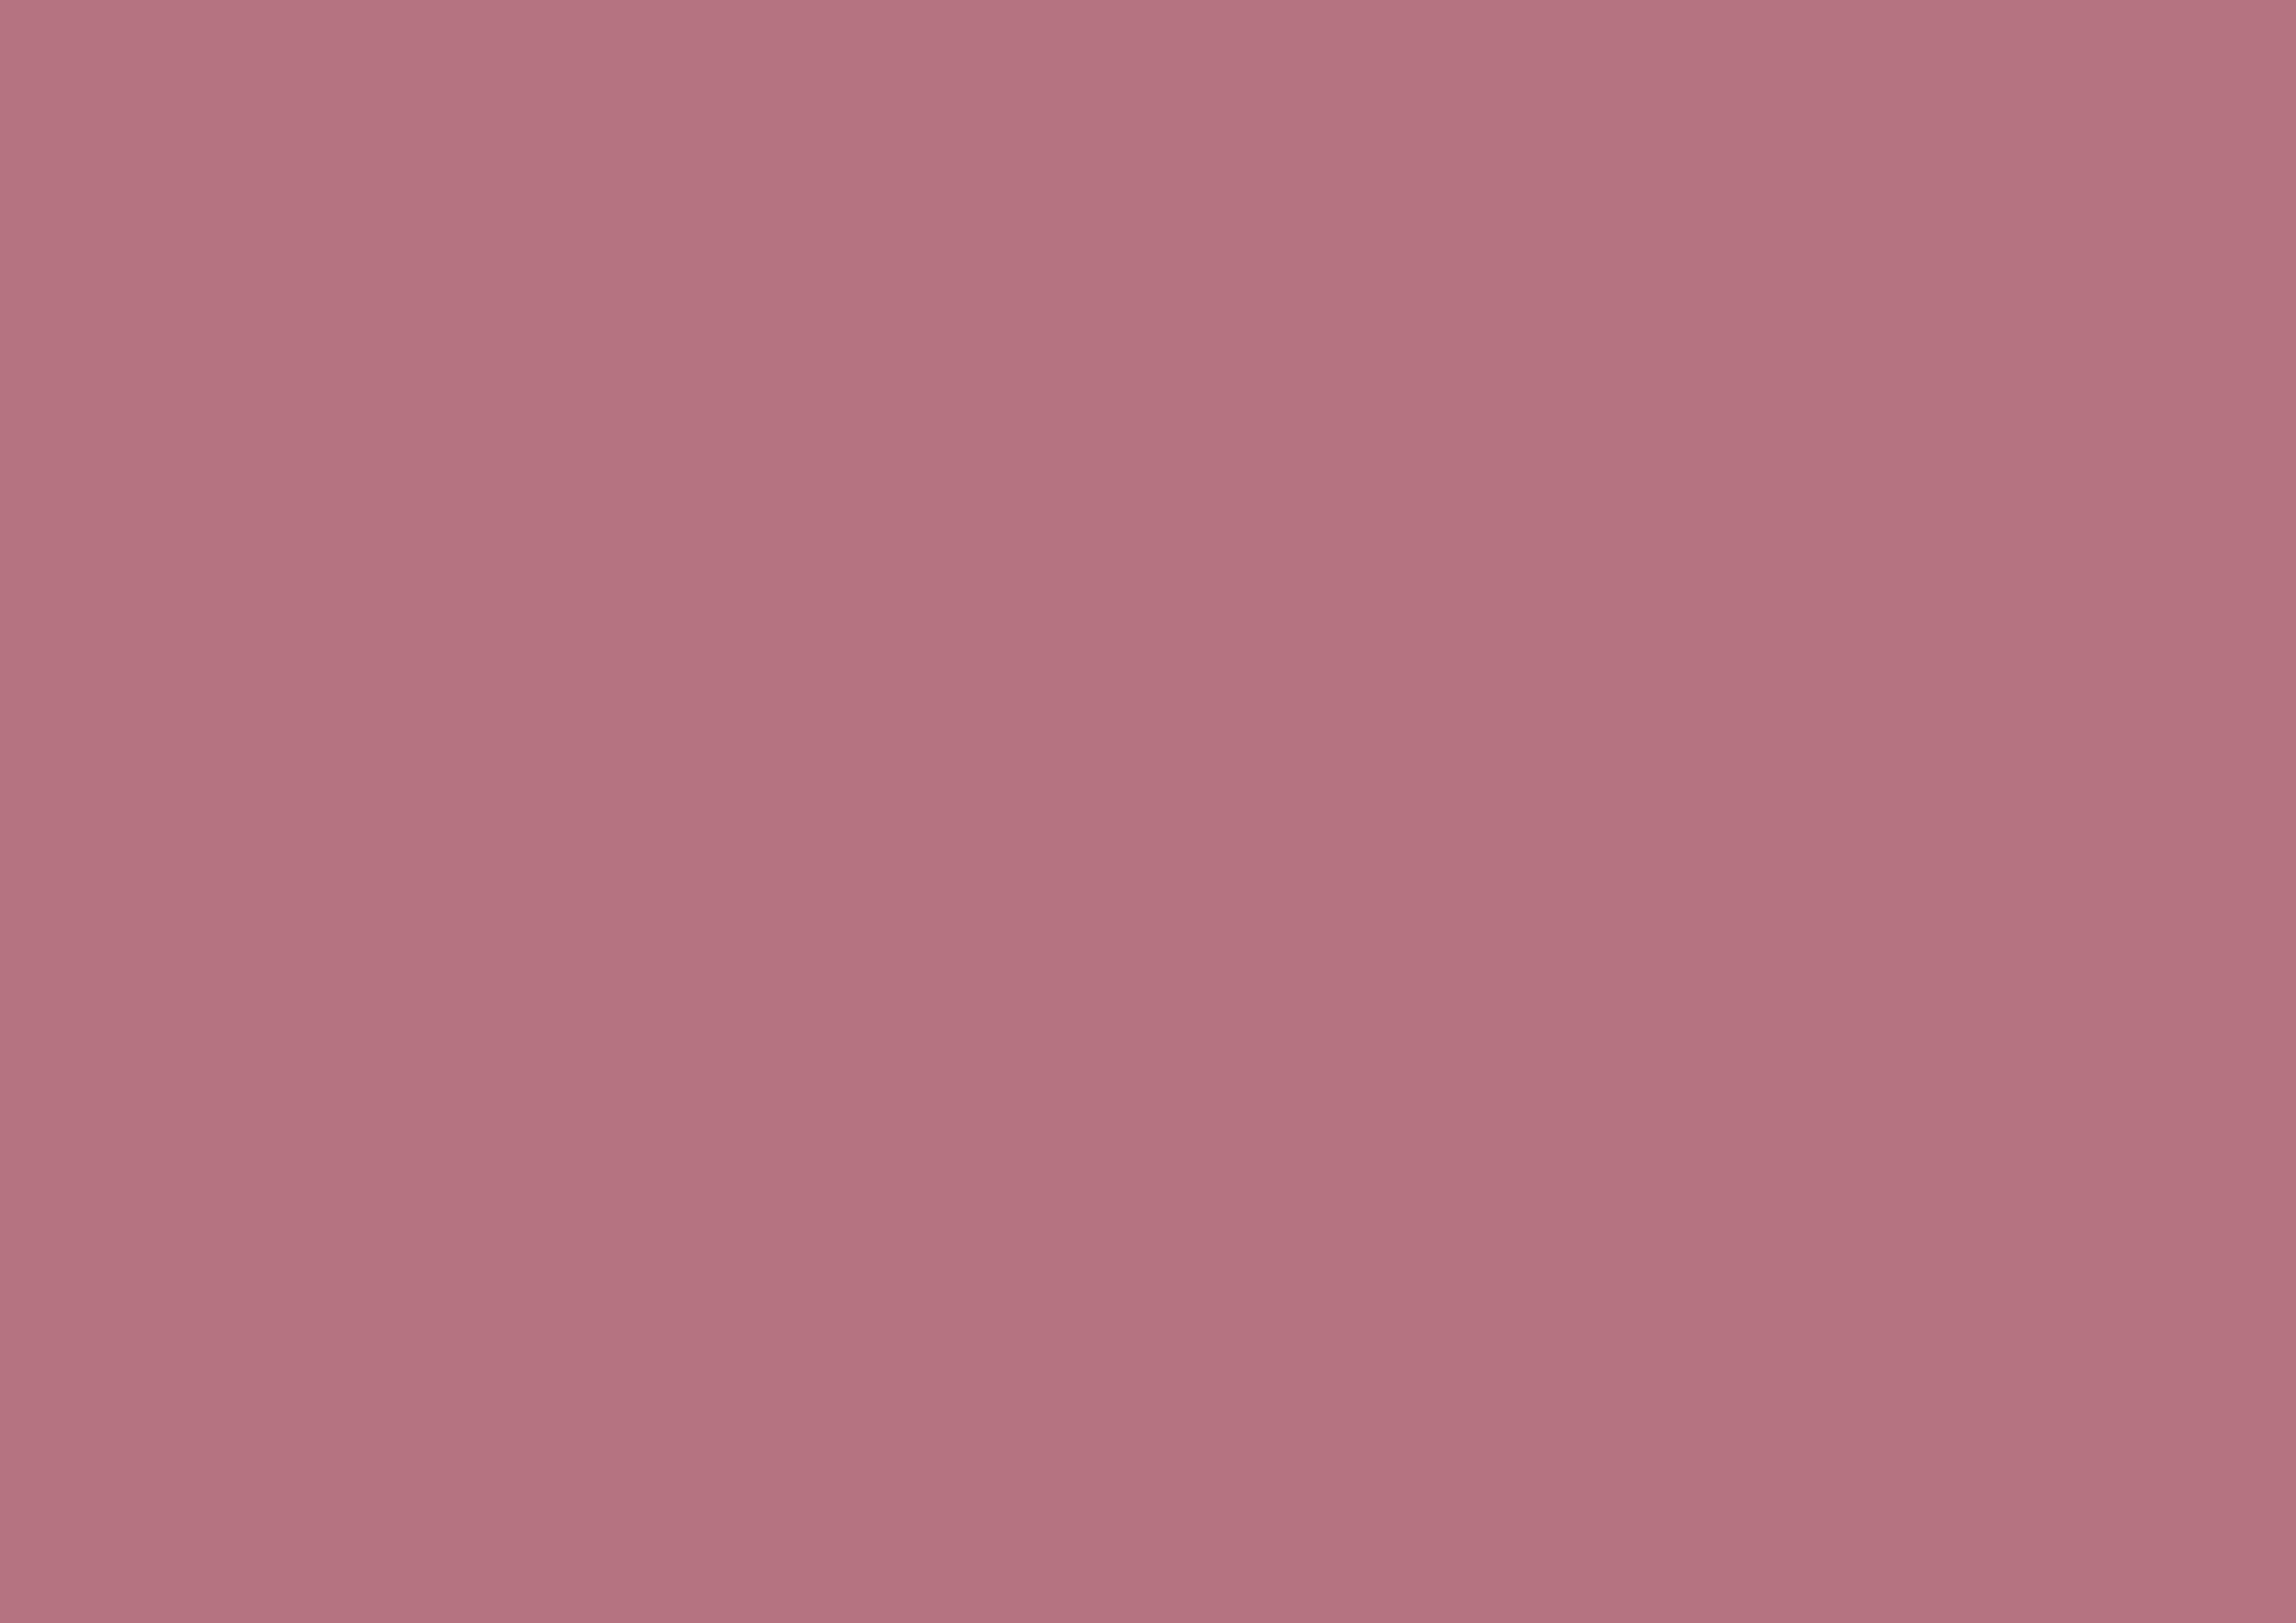 3508x2480 Turkish Rose Solid Color Background